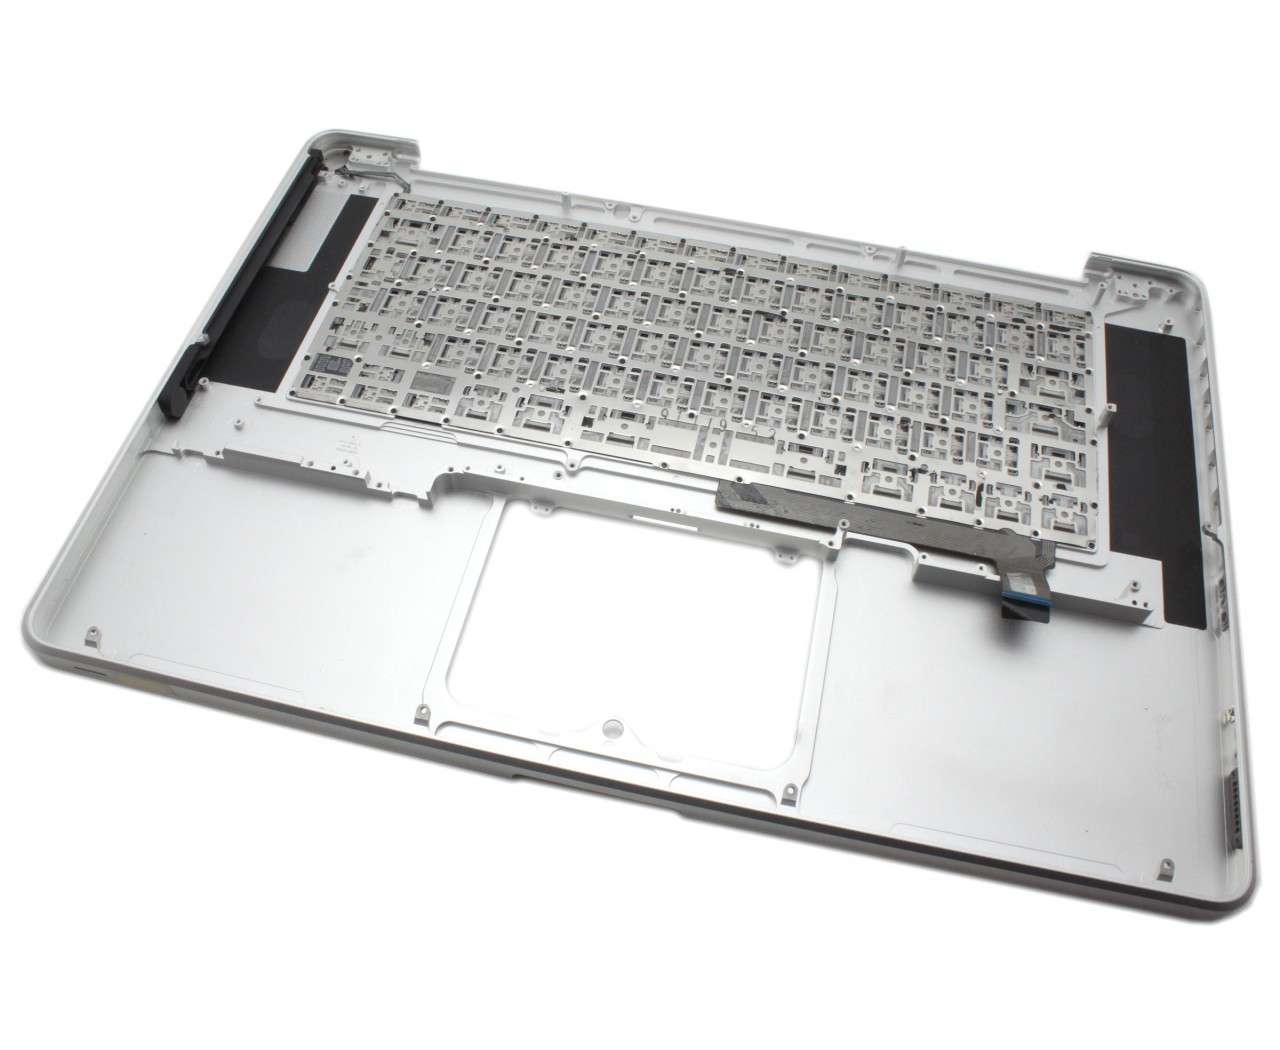 Tastatura Apple MacBook Pro 15 MC723 Neagra cu Palmrest Argintiu Refurbished Apple Apple